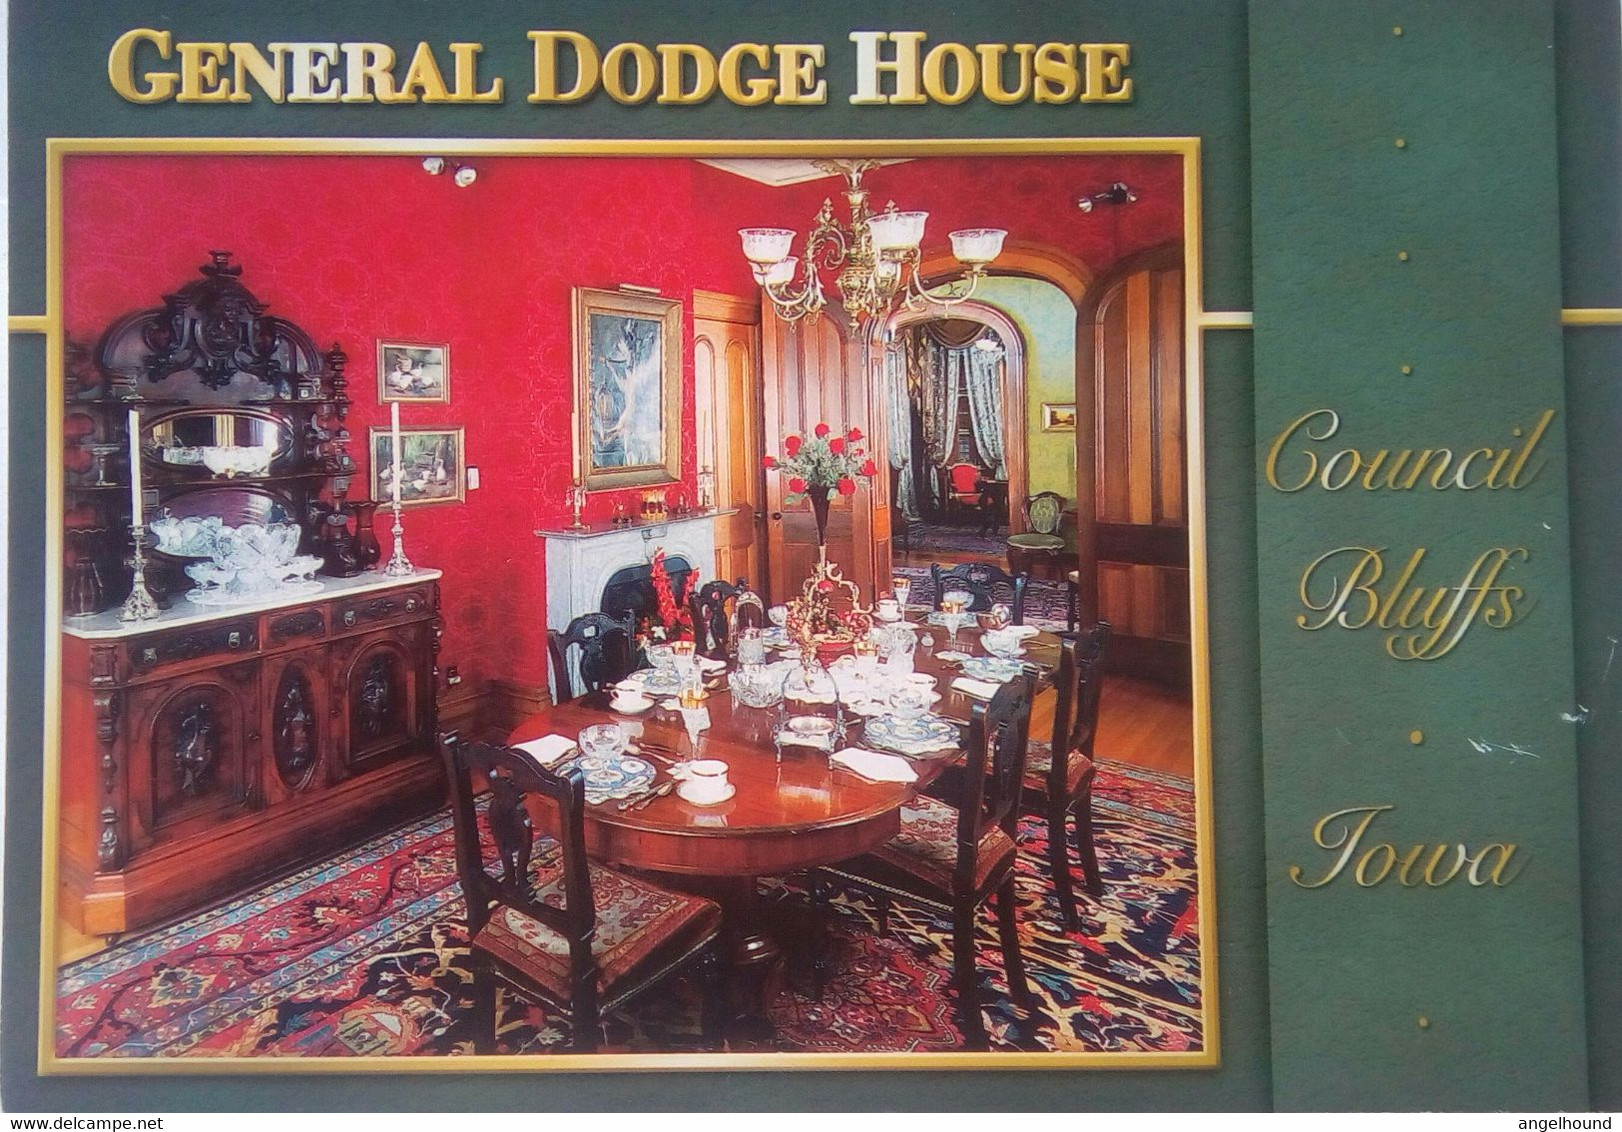 Gen. Dodge House Dining Room - Council Bluffs